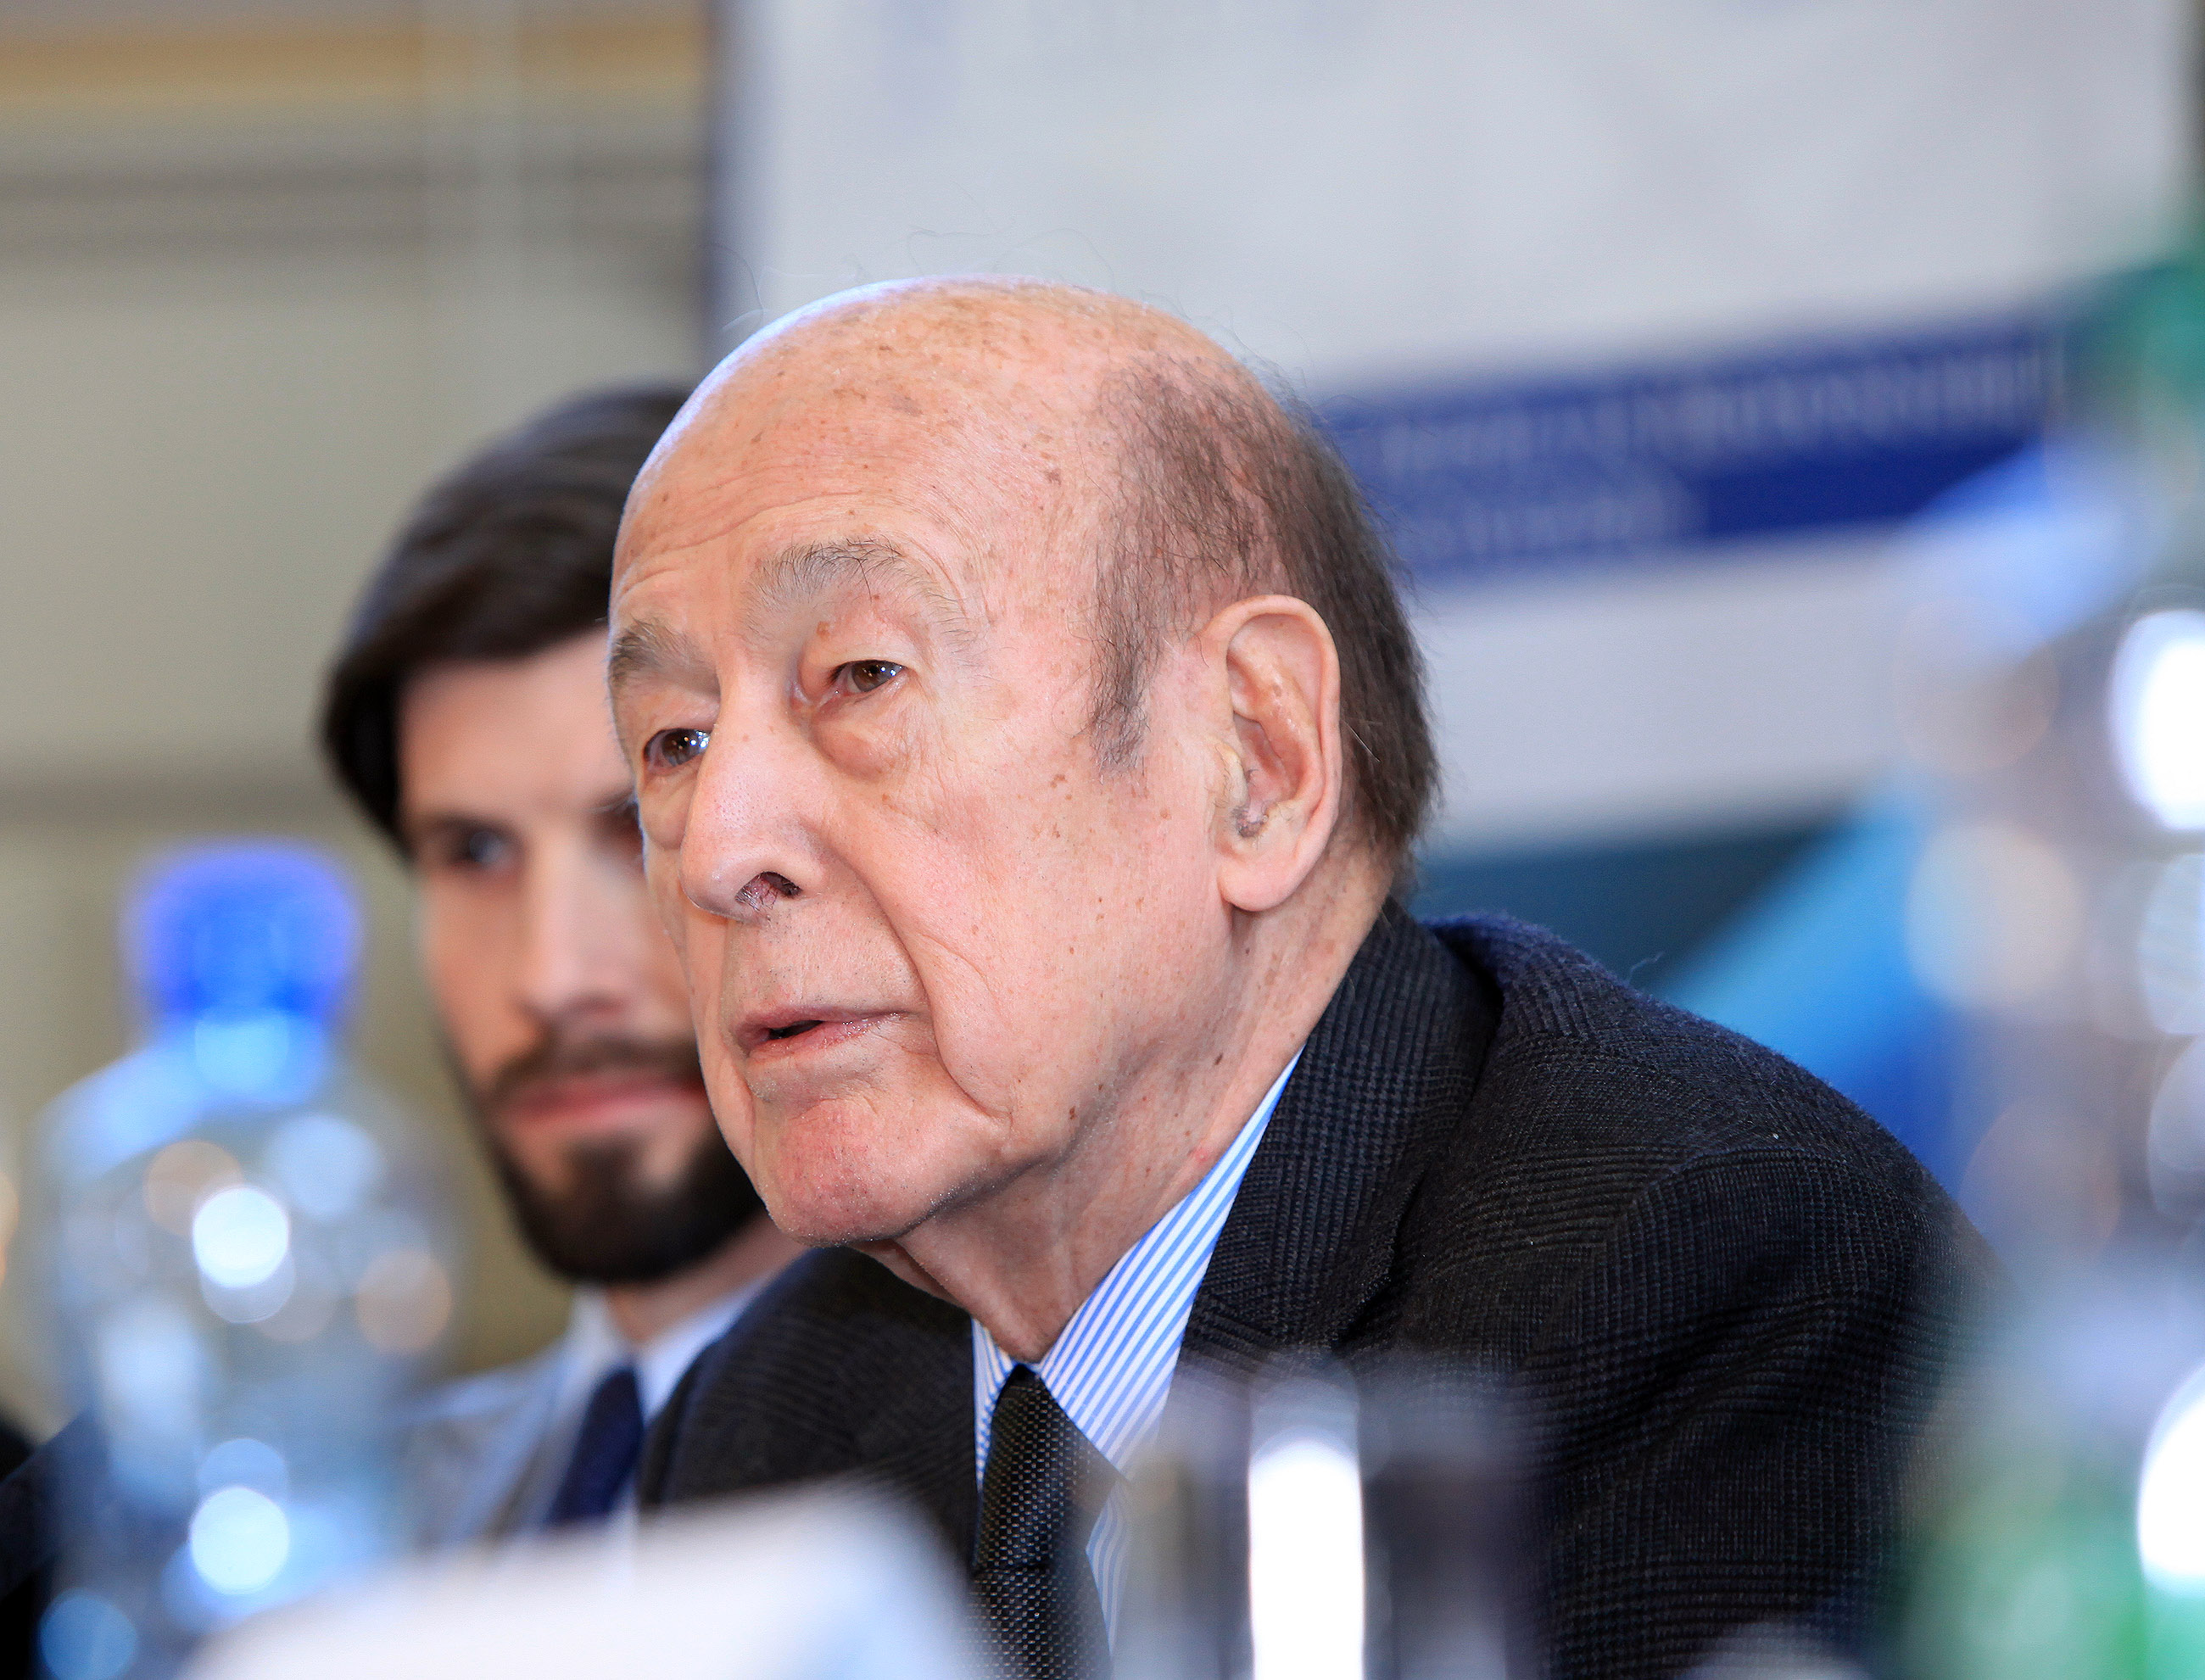 Mr. Valéry Giscard d'Estaing and Mr. Michaelangelo Baracchi Bonvicini